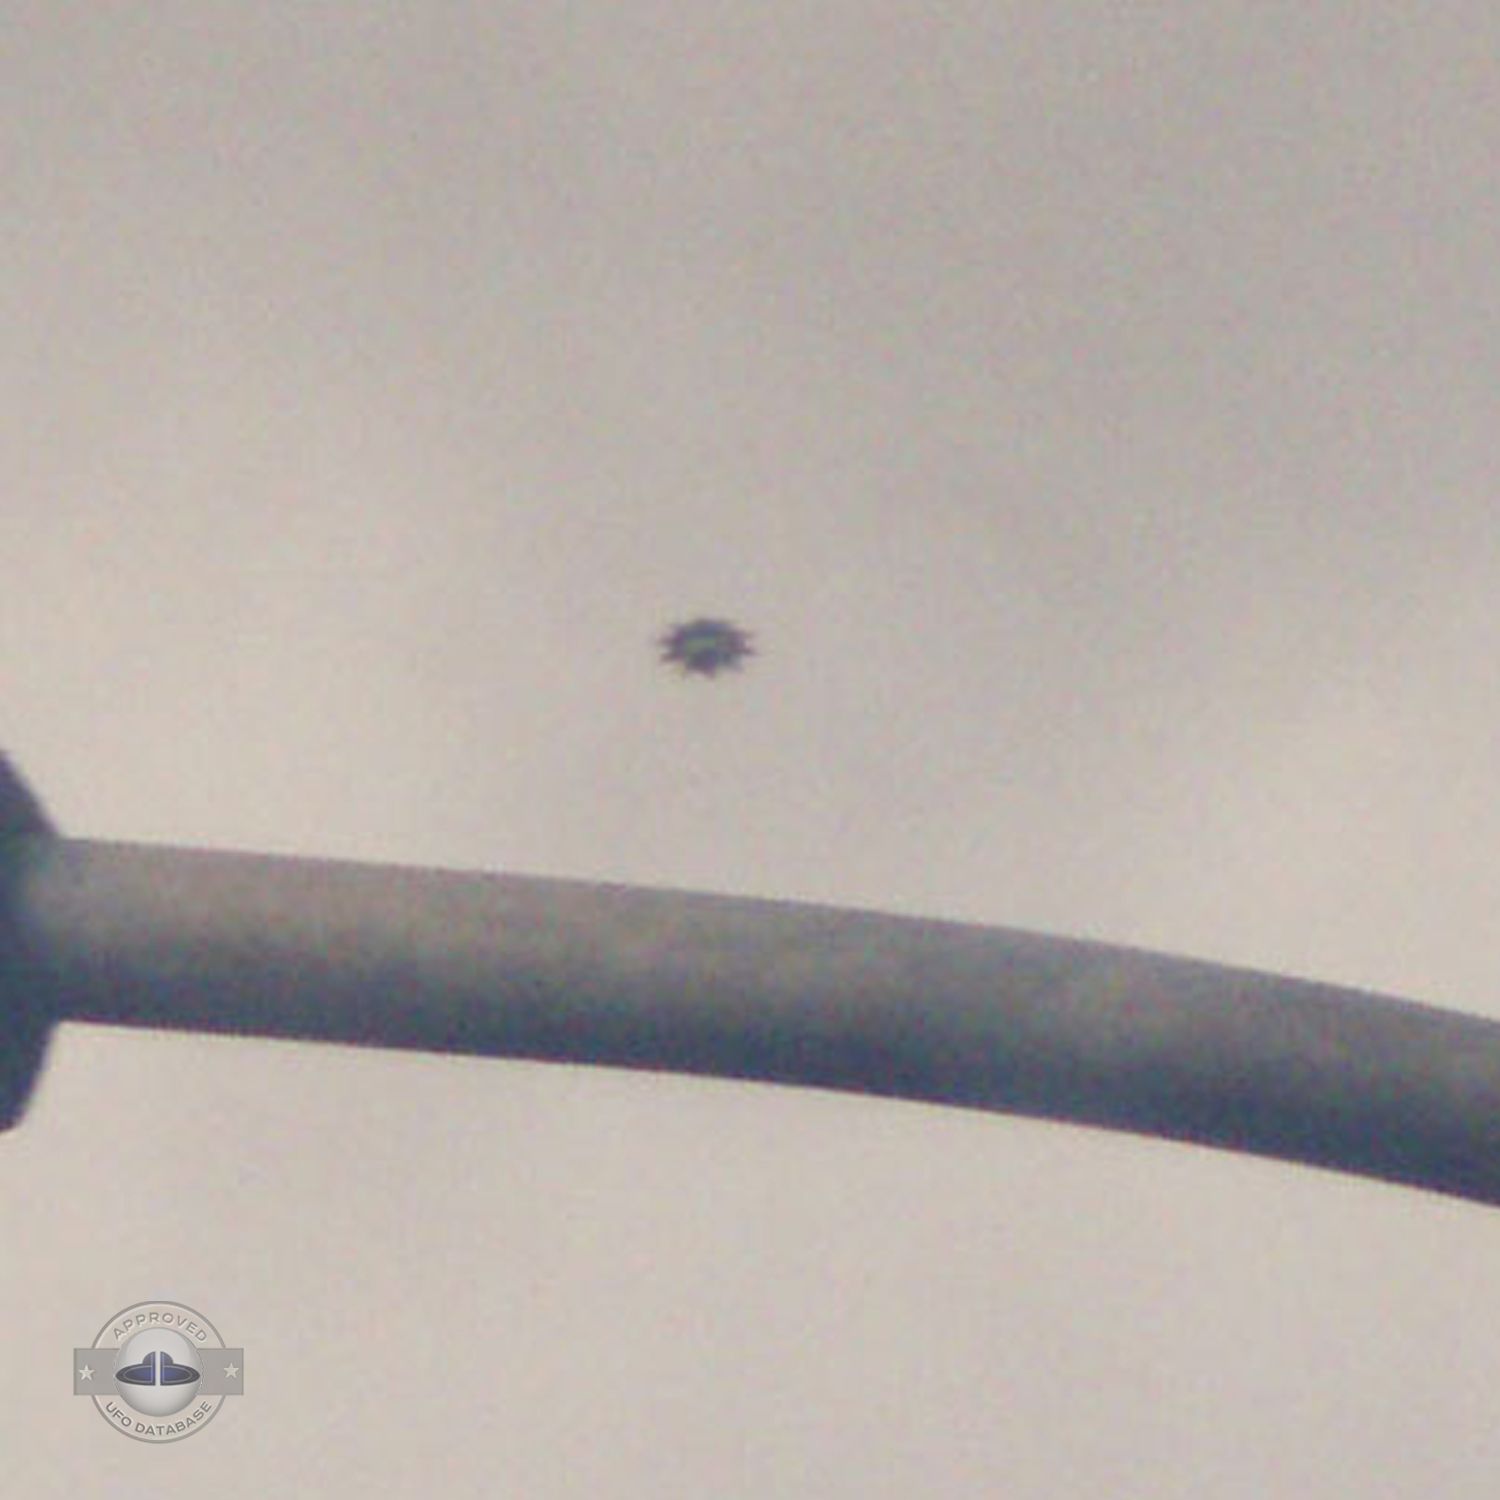 Very Rare UFO shaped like a Sprocket - Sao Bernardo Do Campo, Brazil UFO Picture #225-3